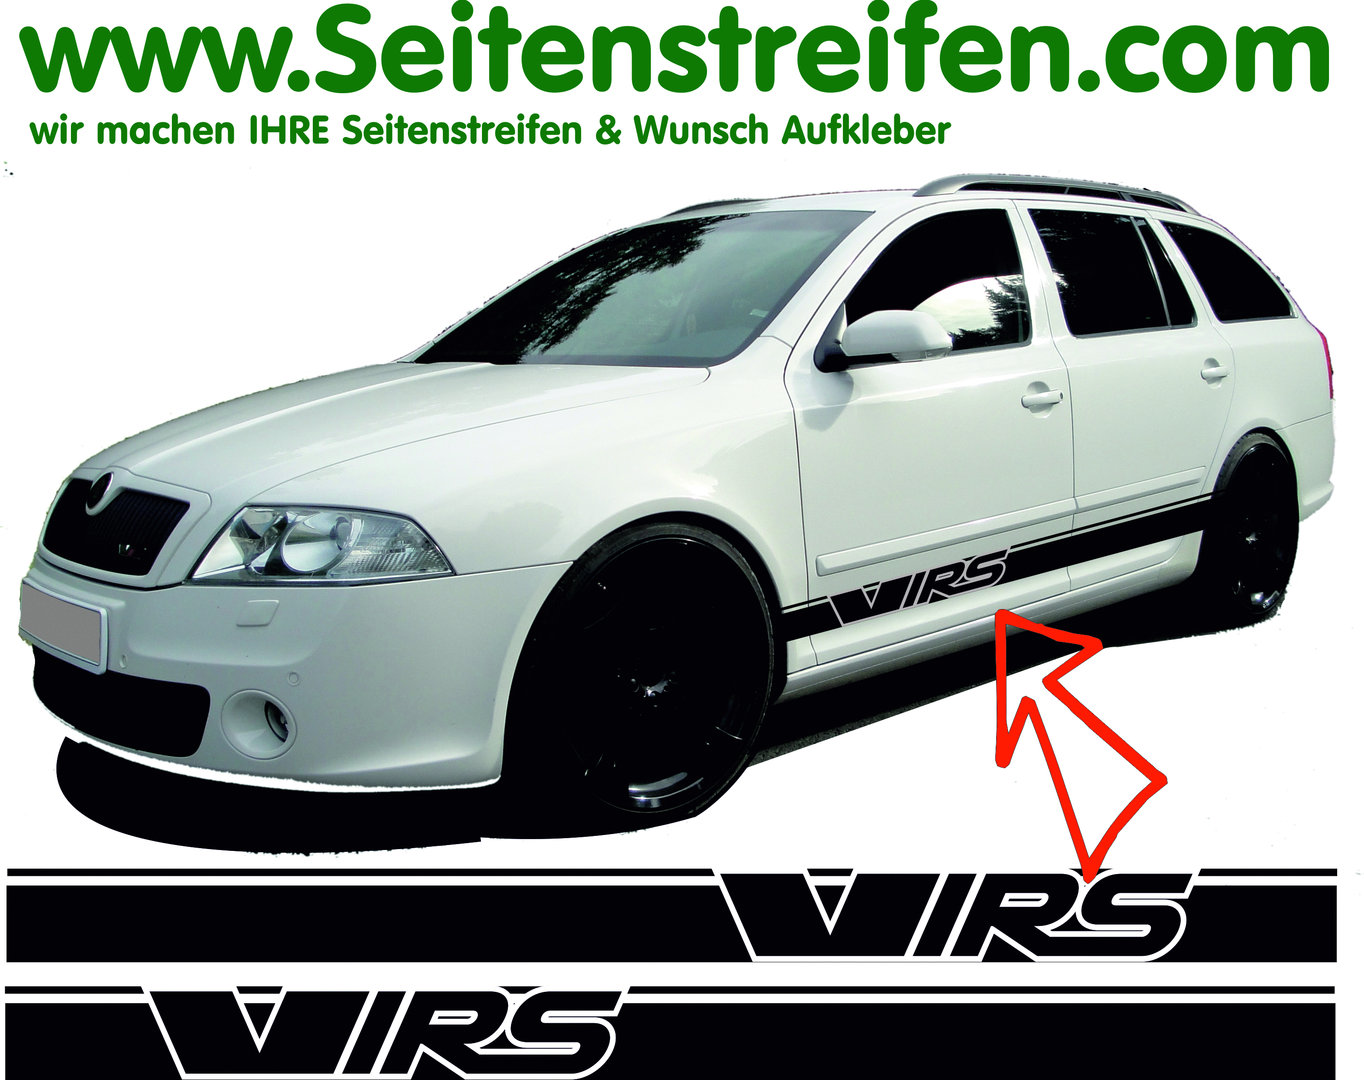 Skoda Octavia per station wagon e limousine tutti i modelli fino ad oggi - VRS / RS adesivi - 4611